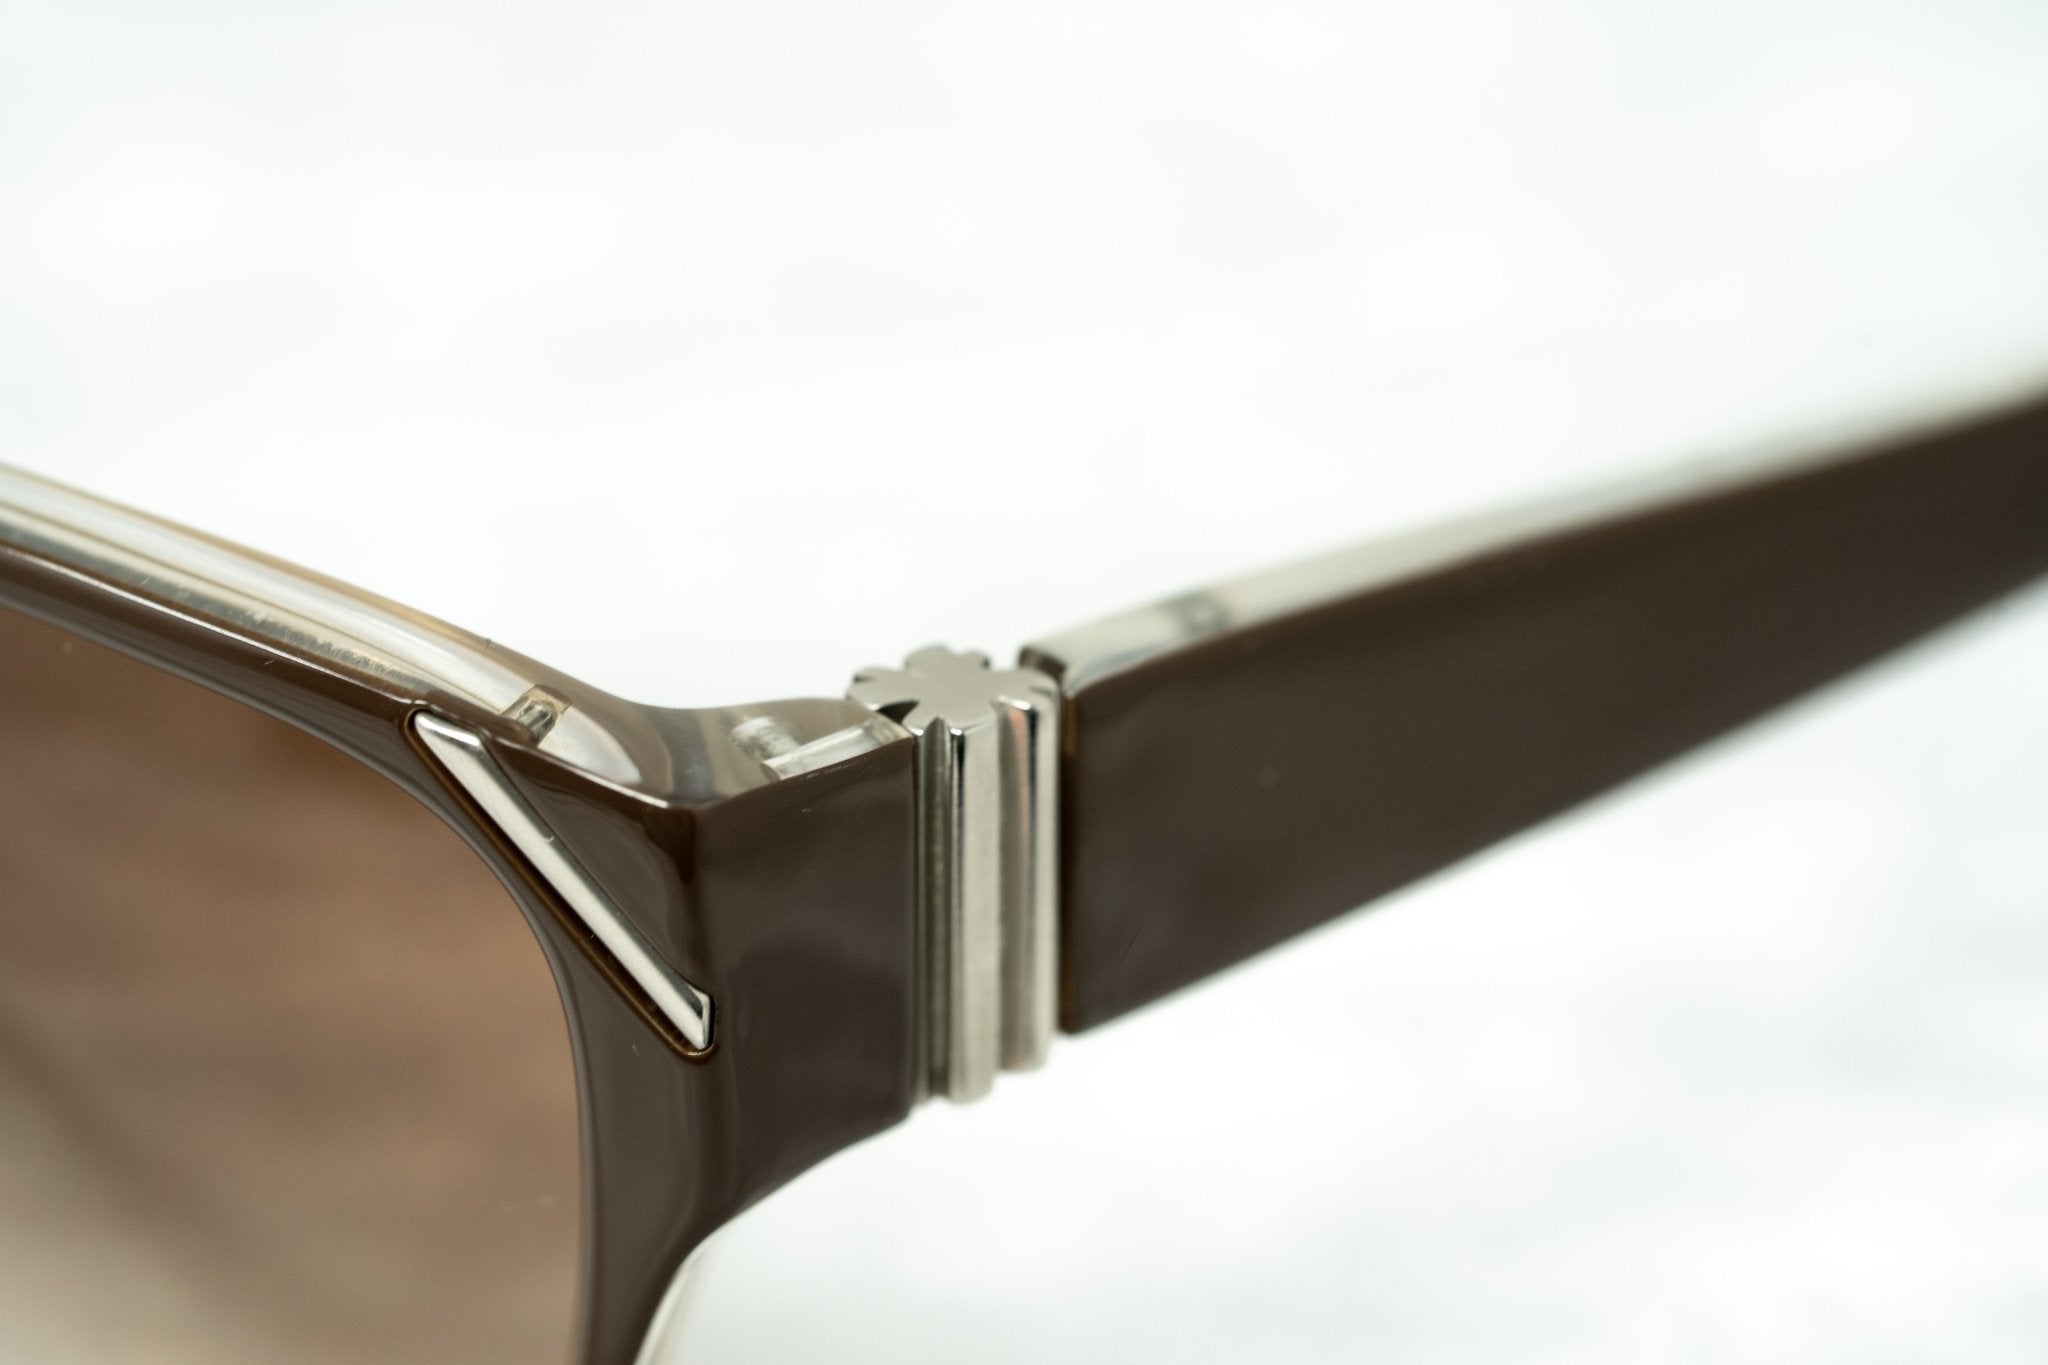 Yohji Yamamoto Unisex Sunglasses Square Brown/Orange and Brown Lenses - YY15C3SUN - Watches & Crystals